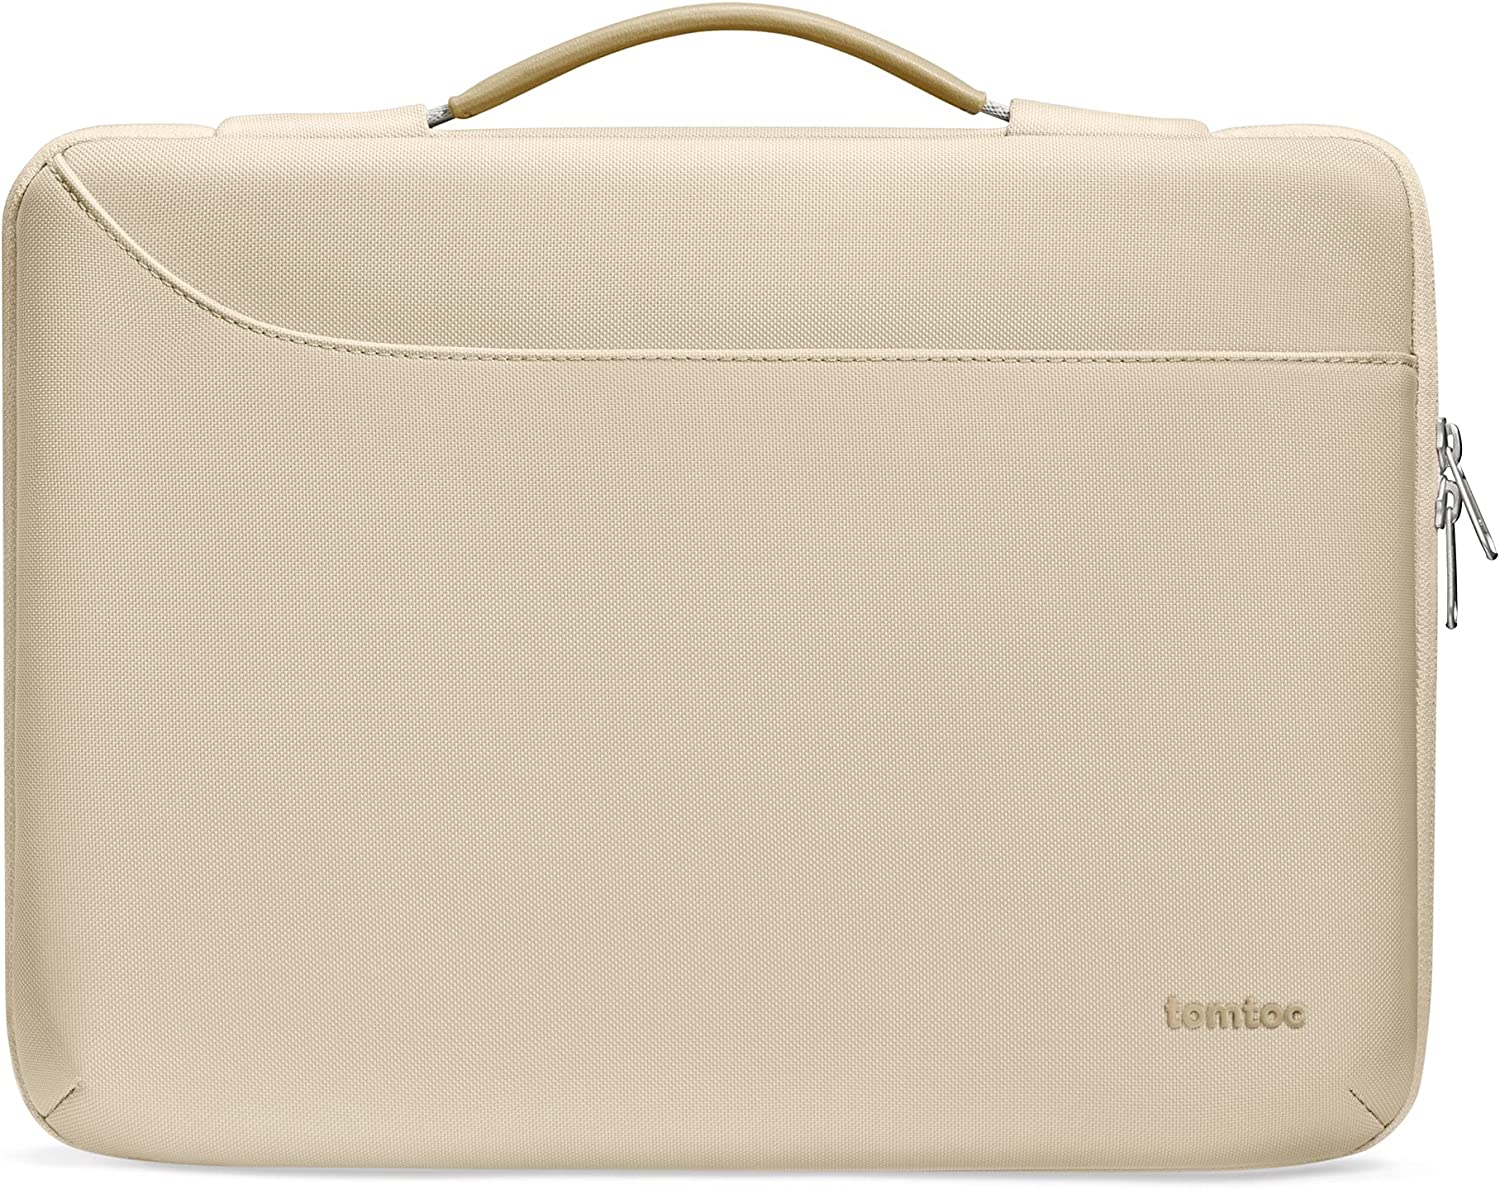 Tomtoc Defender-A22 Laptop Handbag 14 inch - Khaki